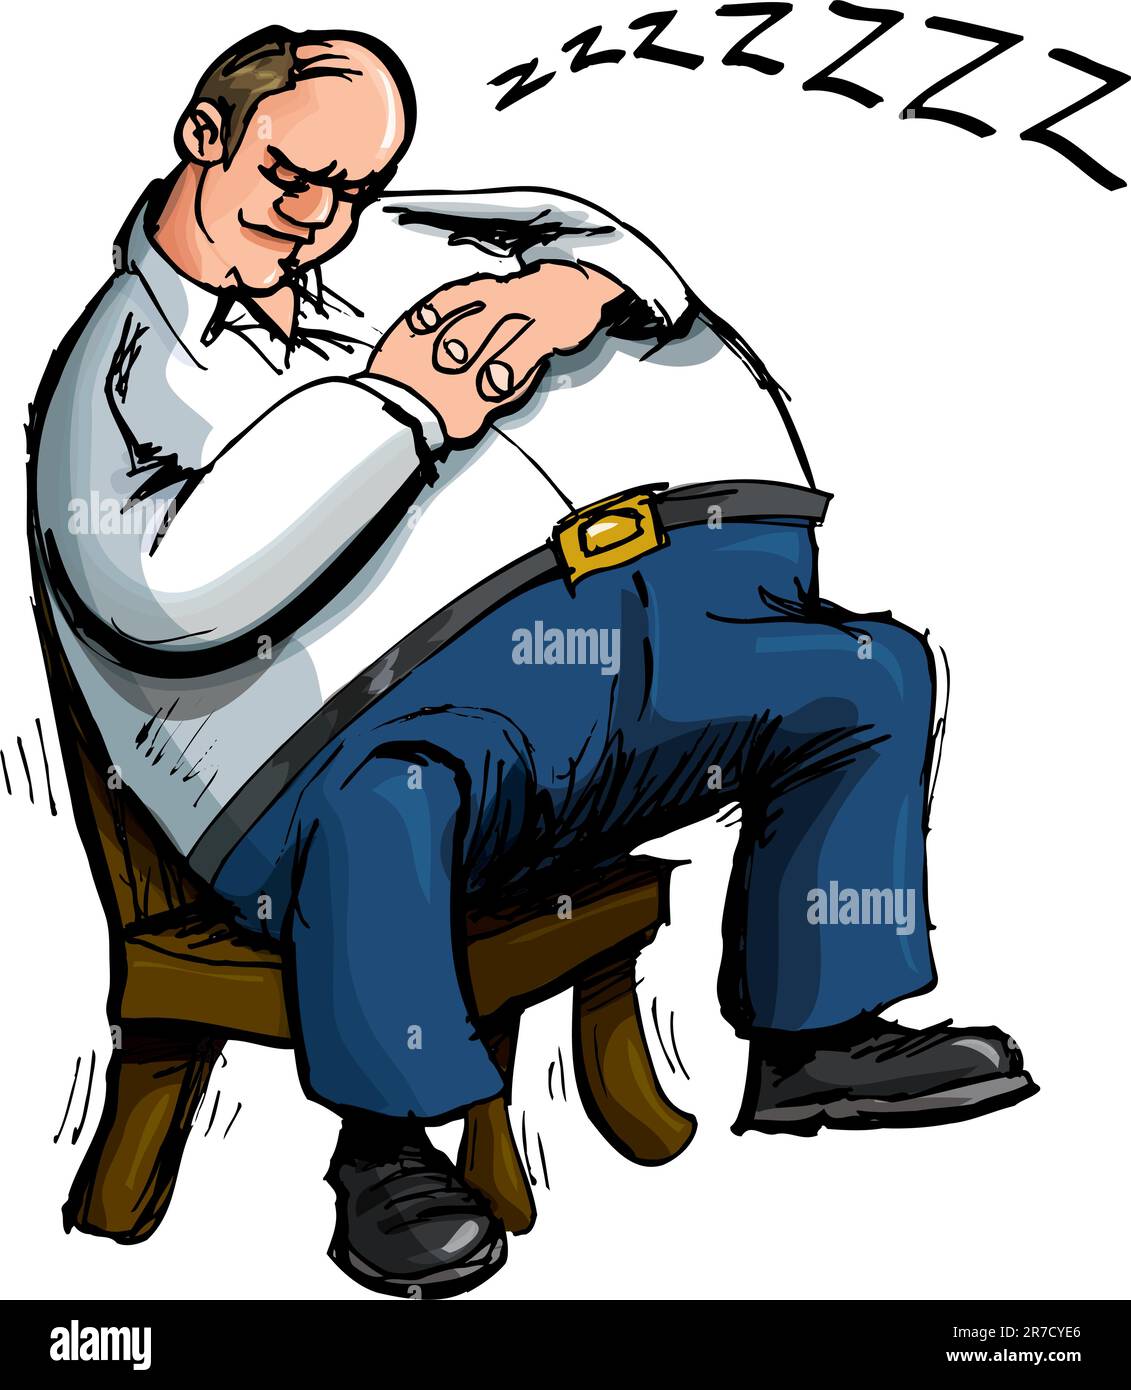 https://c8.alamy.com/comp/2R7CYE6/cartoon-of-overweight-man-sleeping-in-a-chair-isolated-on-white-2R7CYE6.jpg